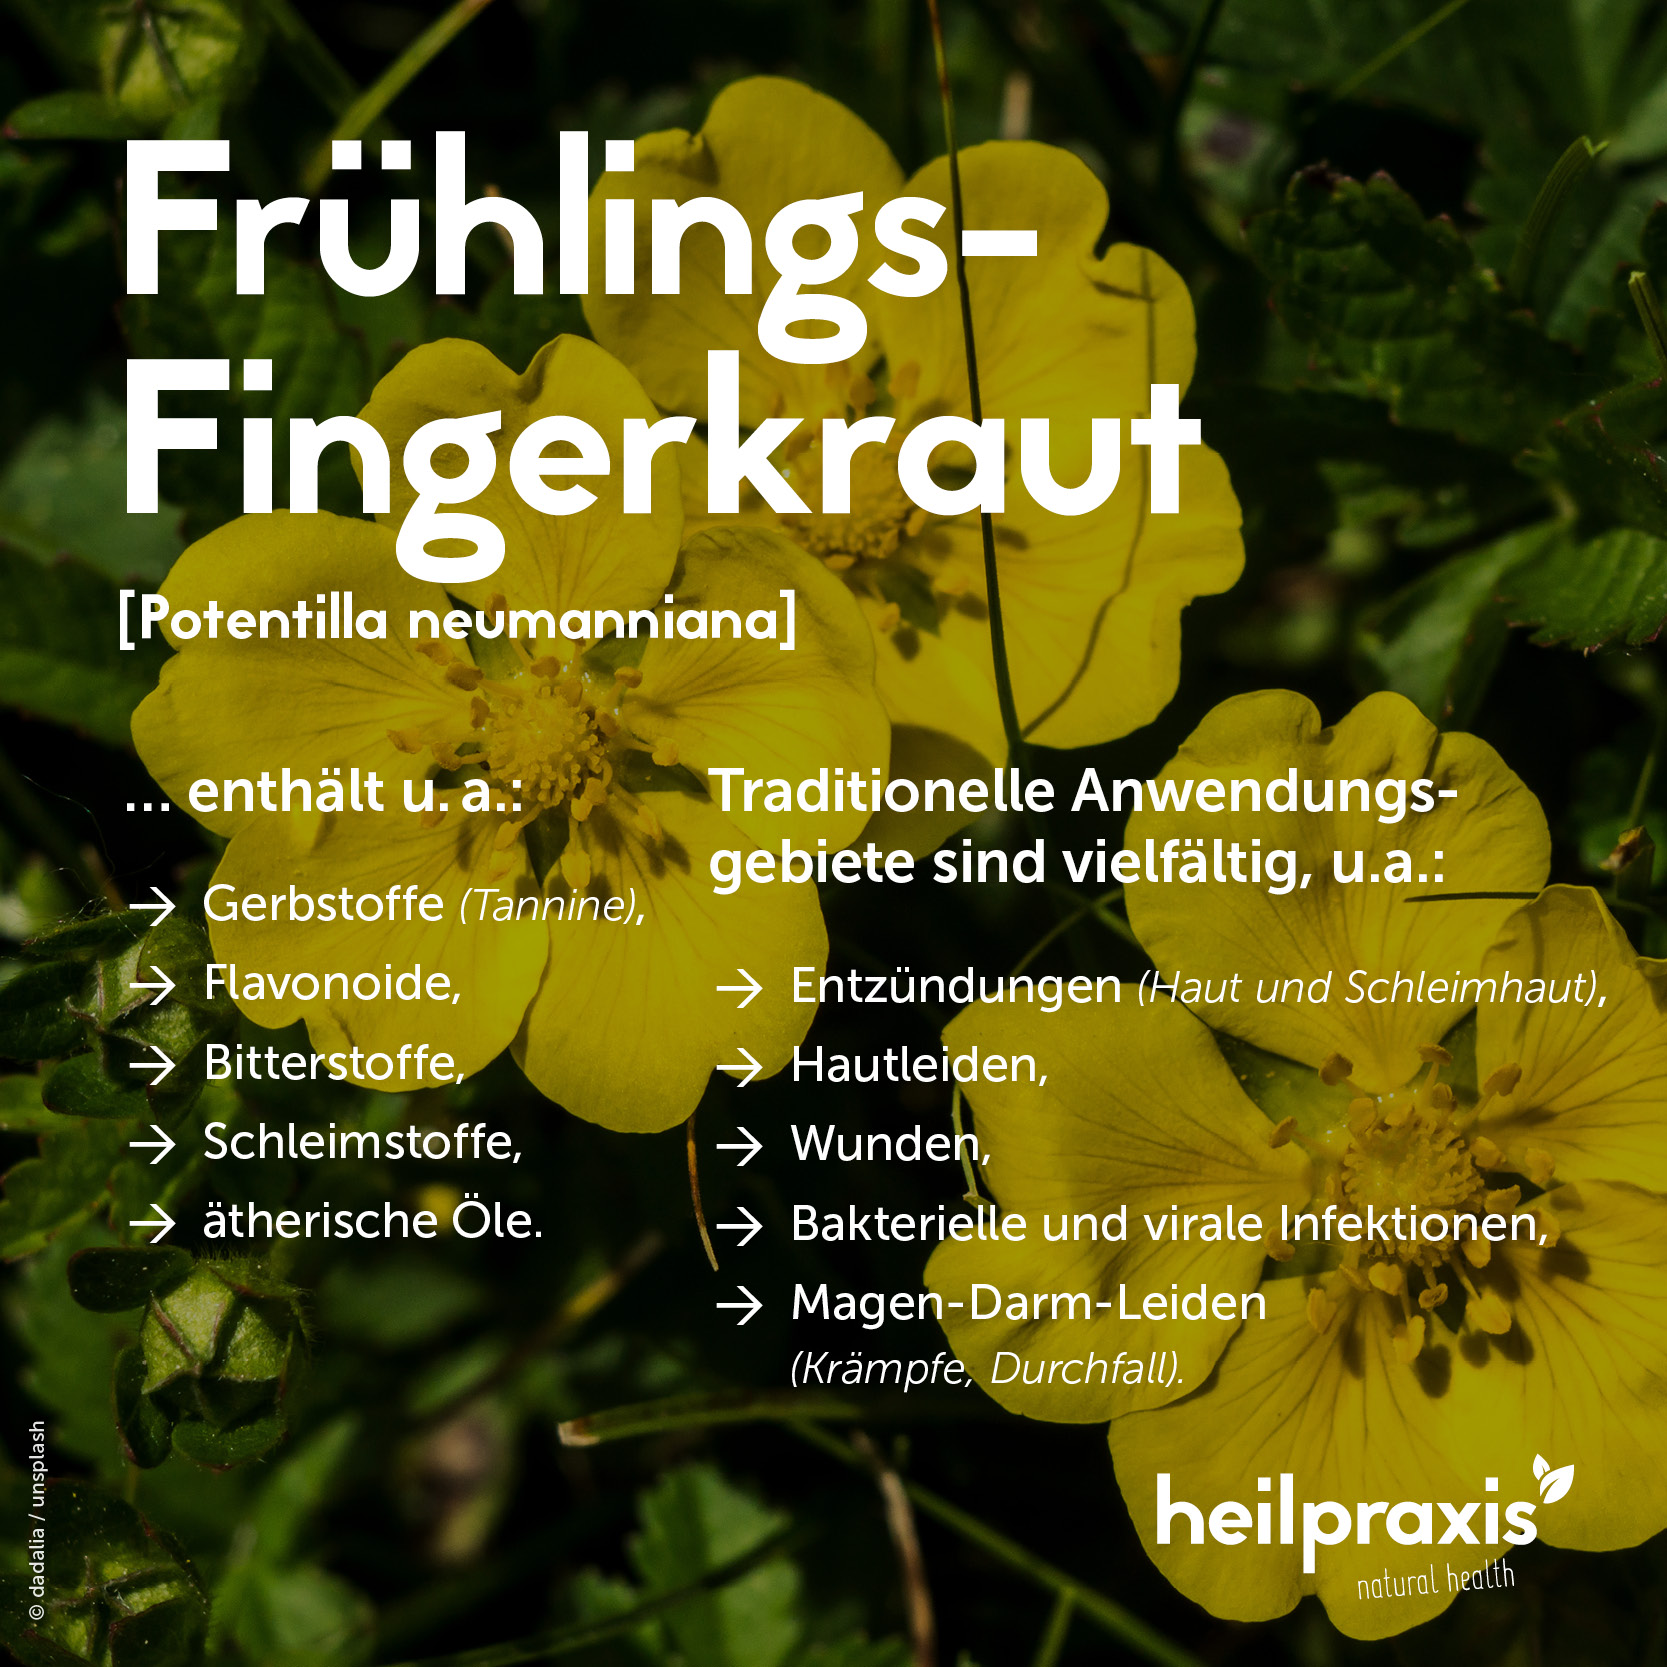 Frühlings-Fingerkraut mit gelben Blüten